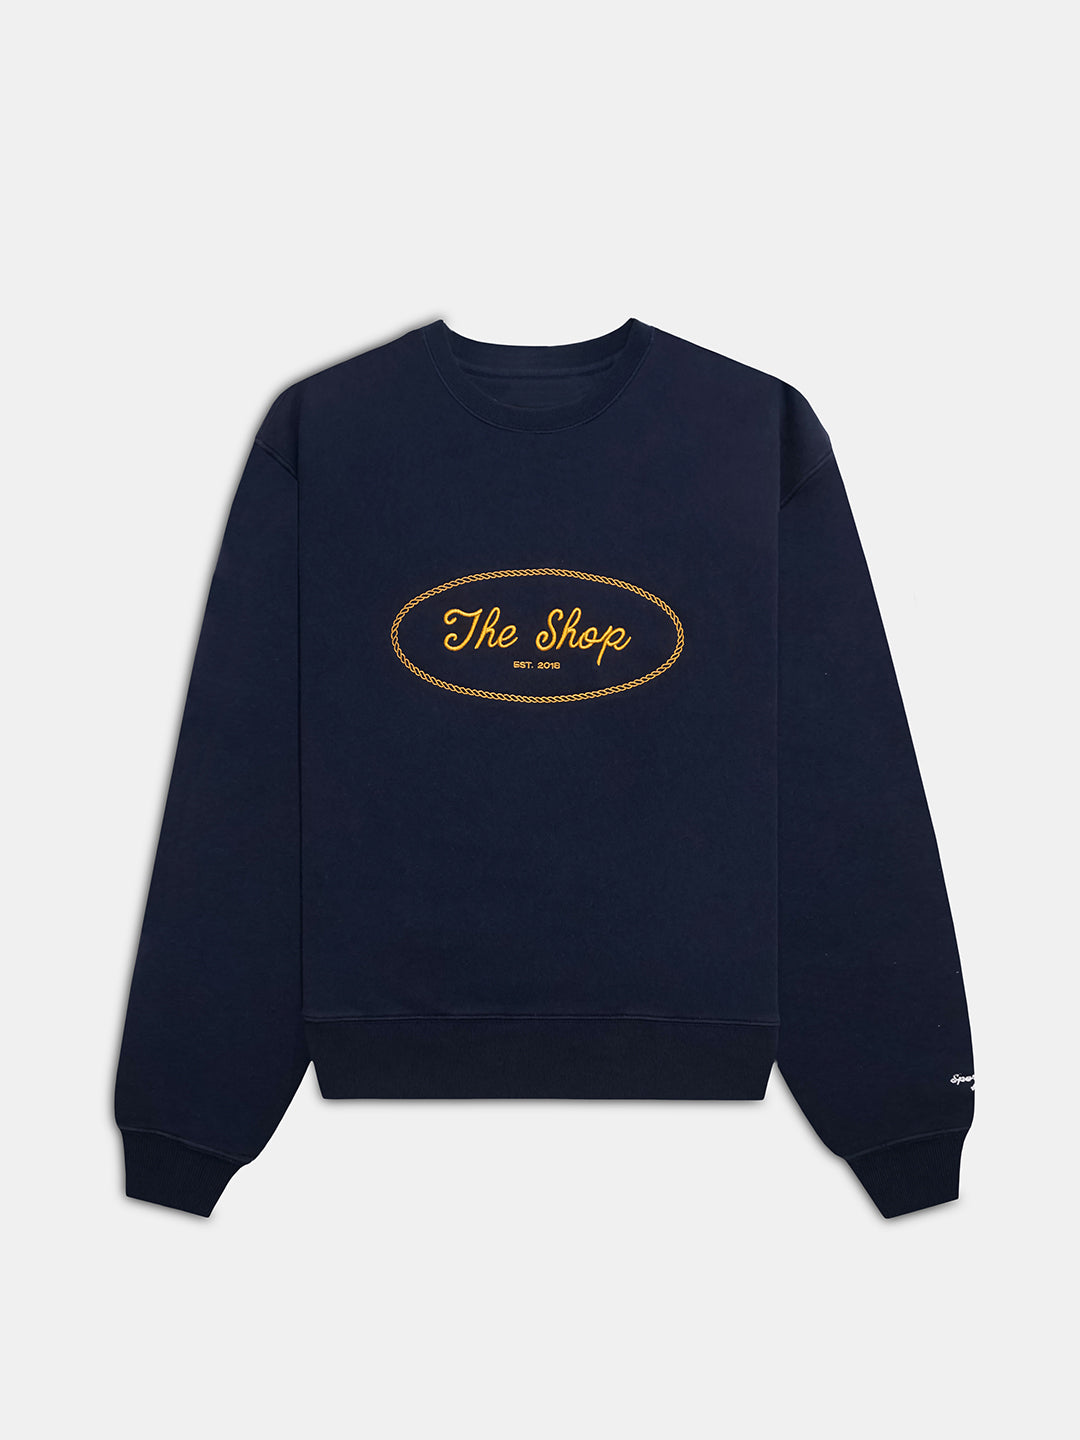 The Shop By Hand Crewneck Sweatshirt True Navy - Front